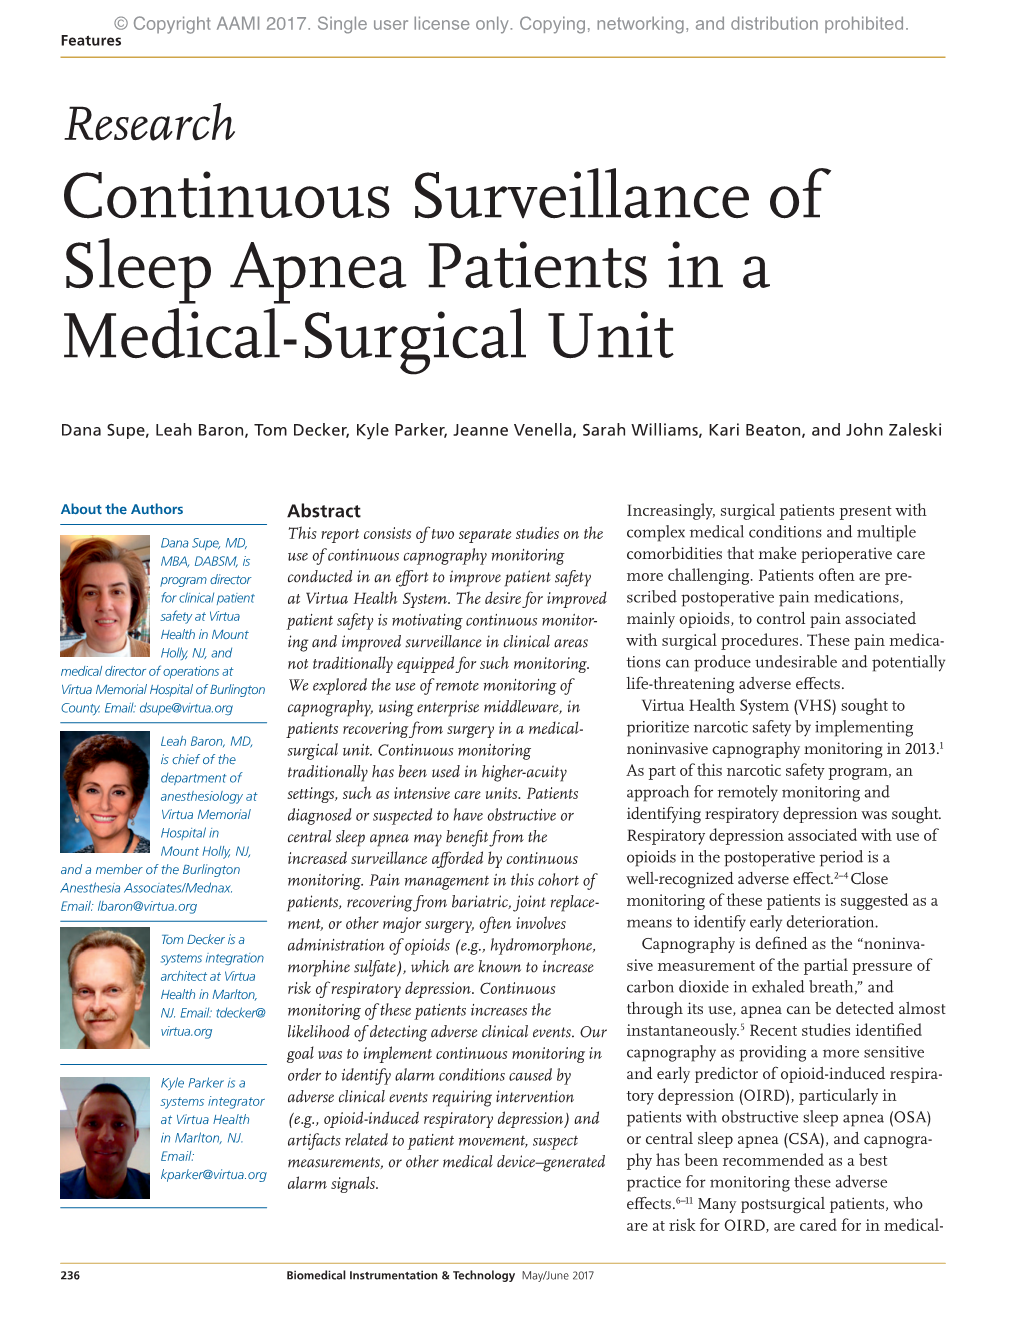 Continuous Surveillance of Sleep Apnea Patients in a Medical-Surgical Unit